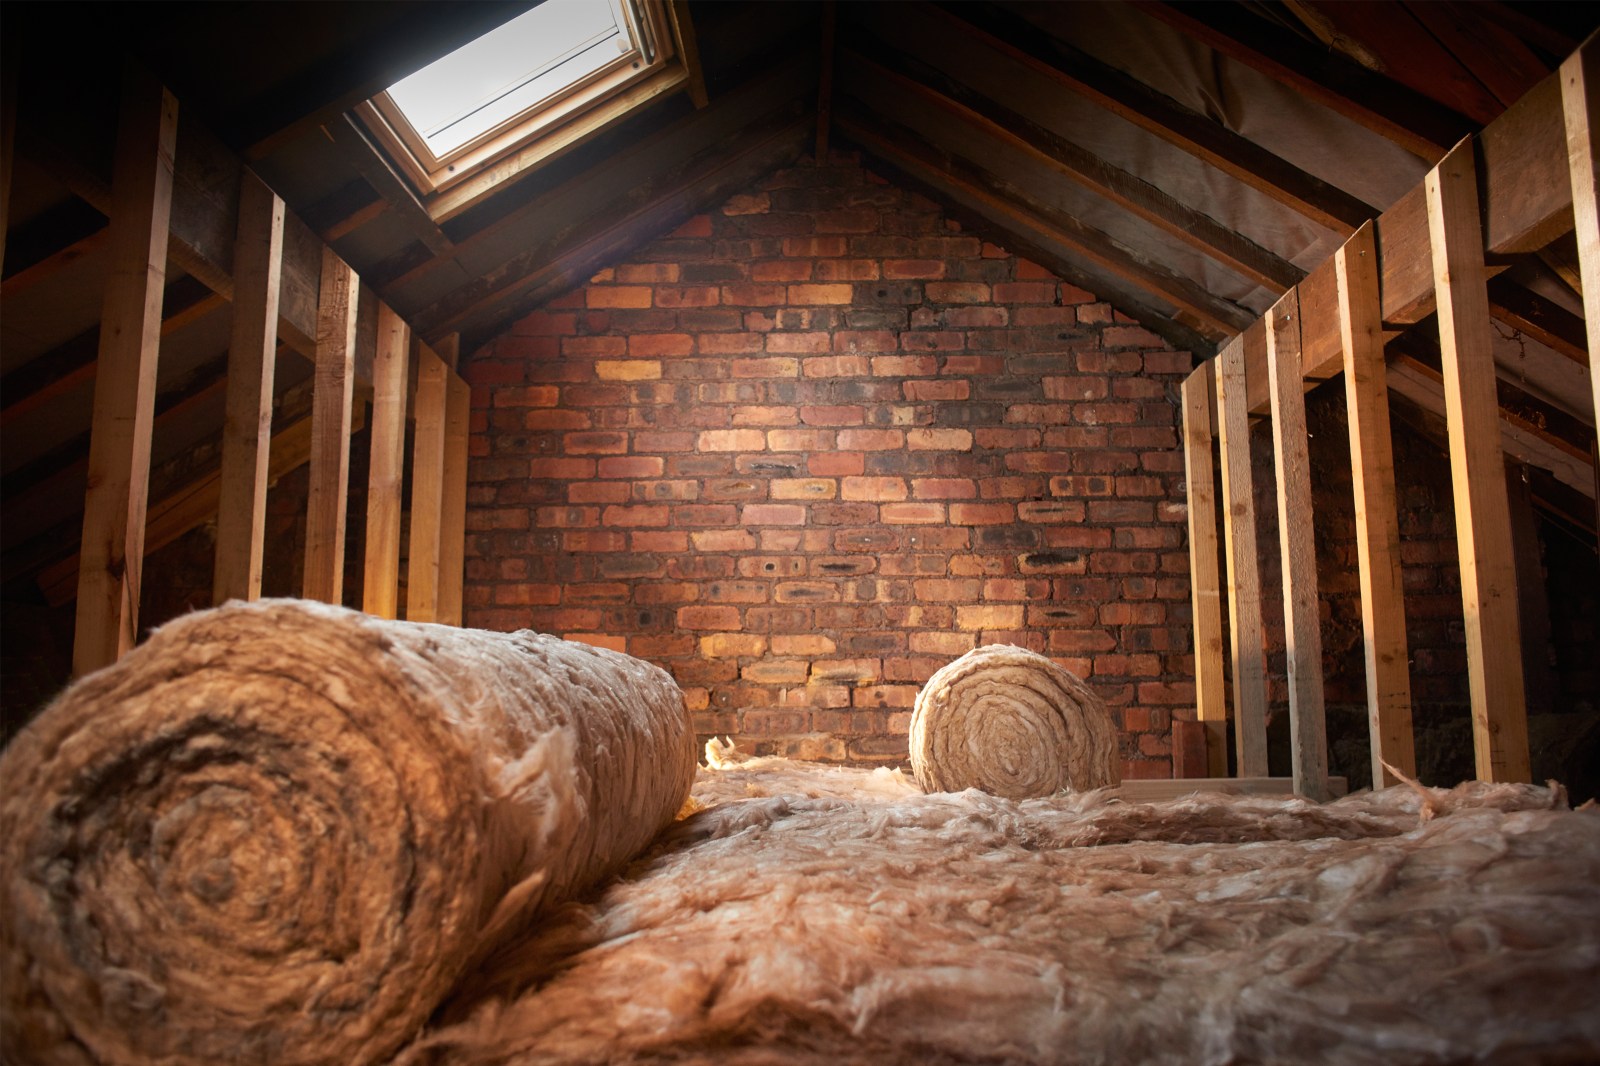 cypress insulation company solar attic fans